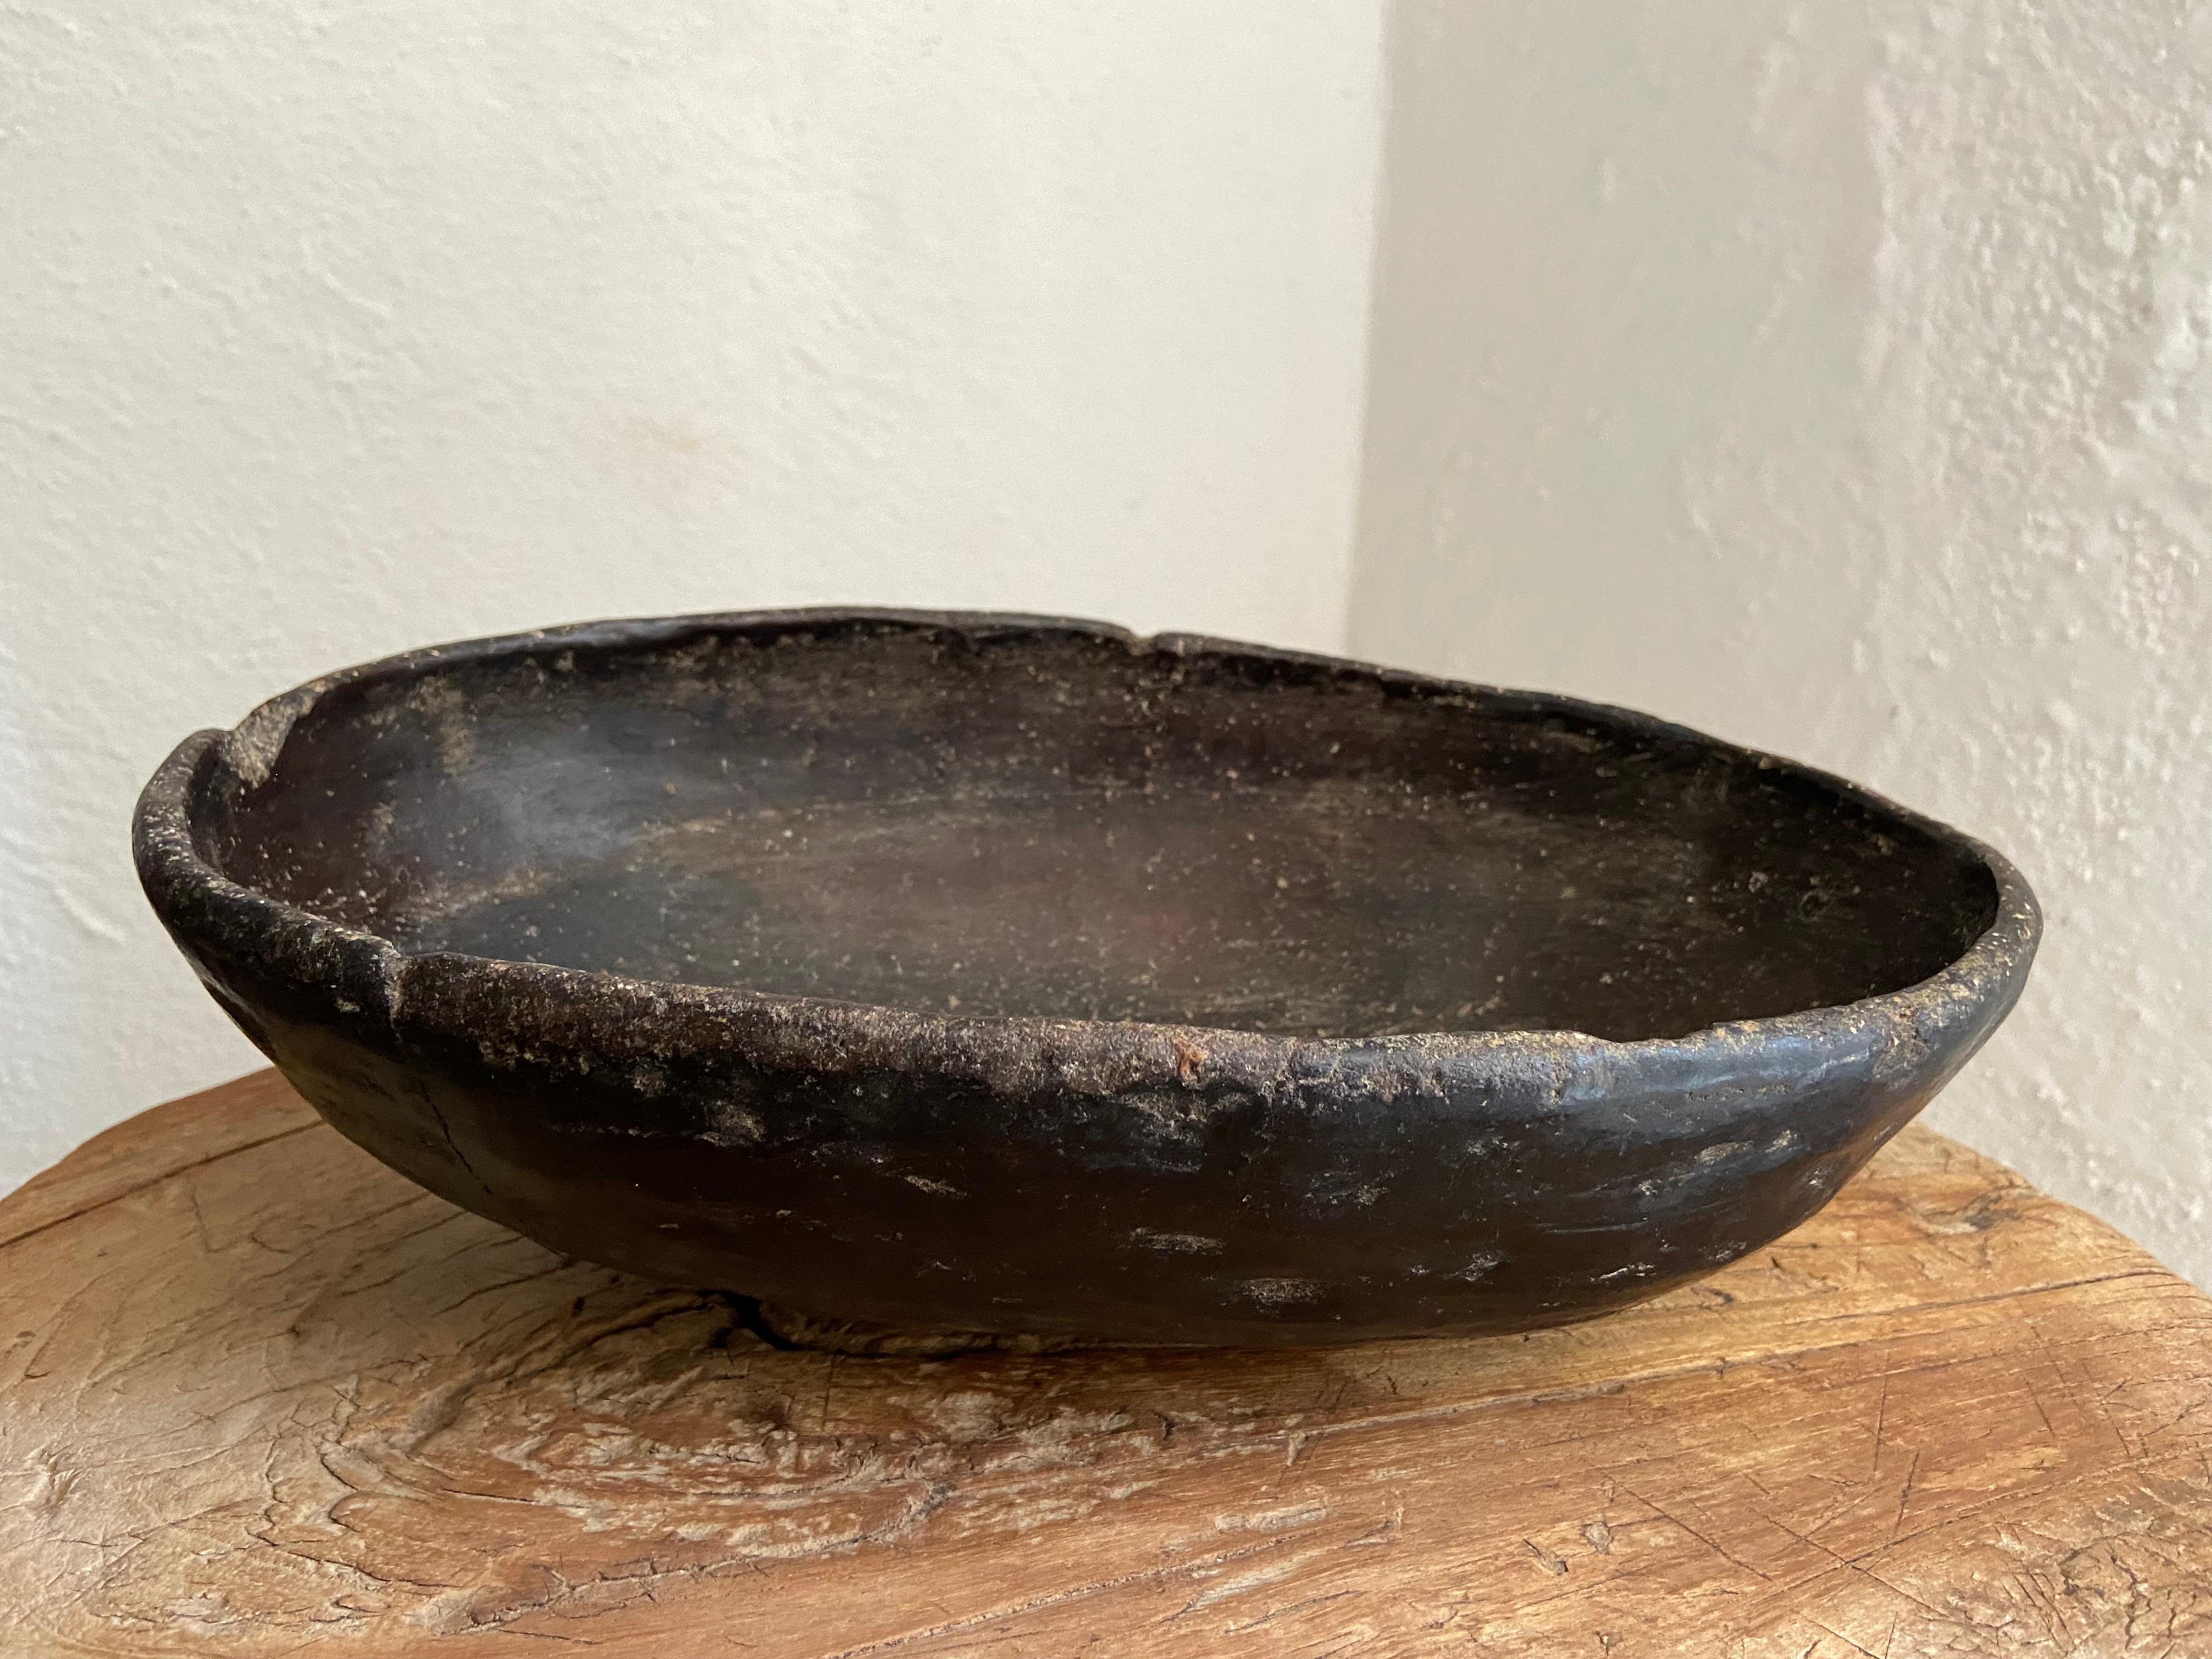 Primitive Styled Ceramic Bowl From The Mixteca Region of Oaxaca, Mexico 1